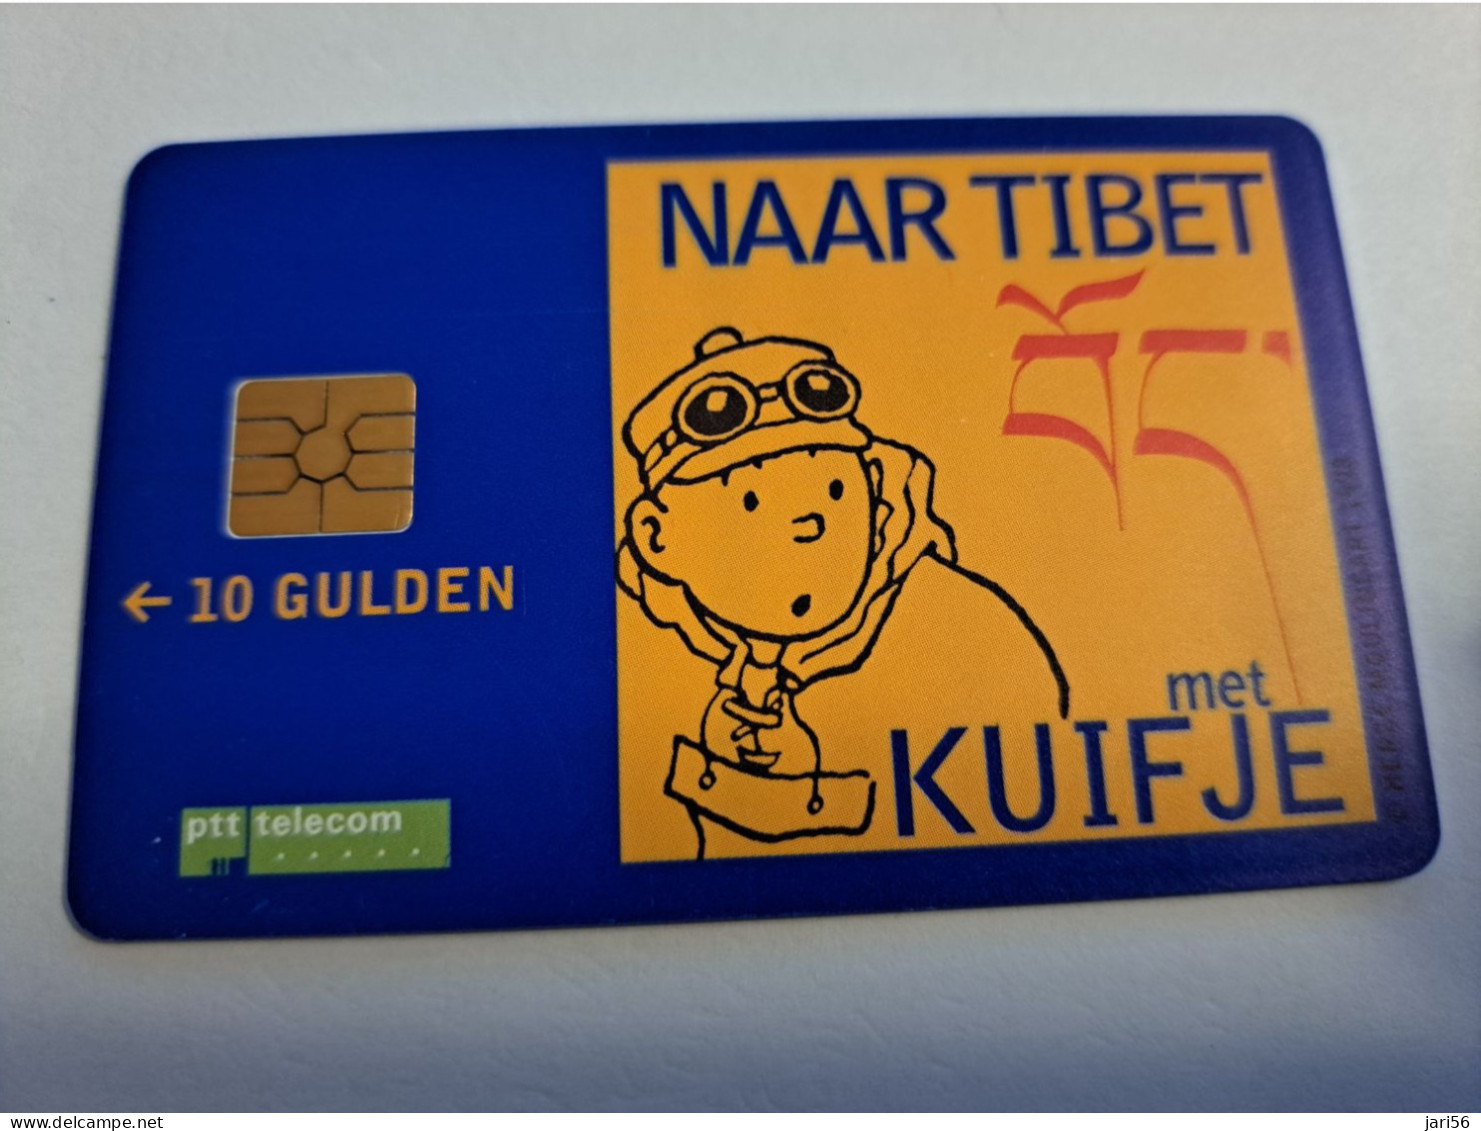 NETHERLANDS / FL 10,00- CHIP CARD / CKD 126 / KUIFJE/ TIN TIN    / PRIVATE  MINT  ** 15934** - [3] Sim Cards, Prepaid & Refills